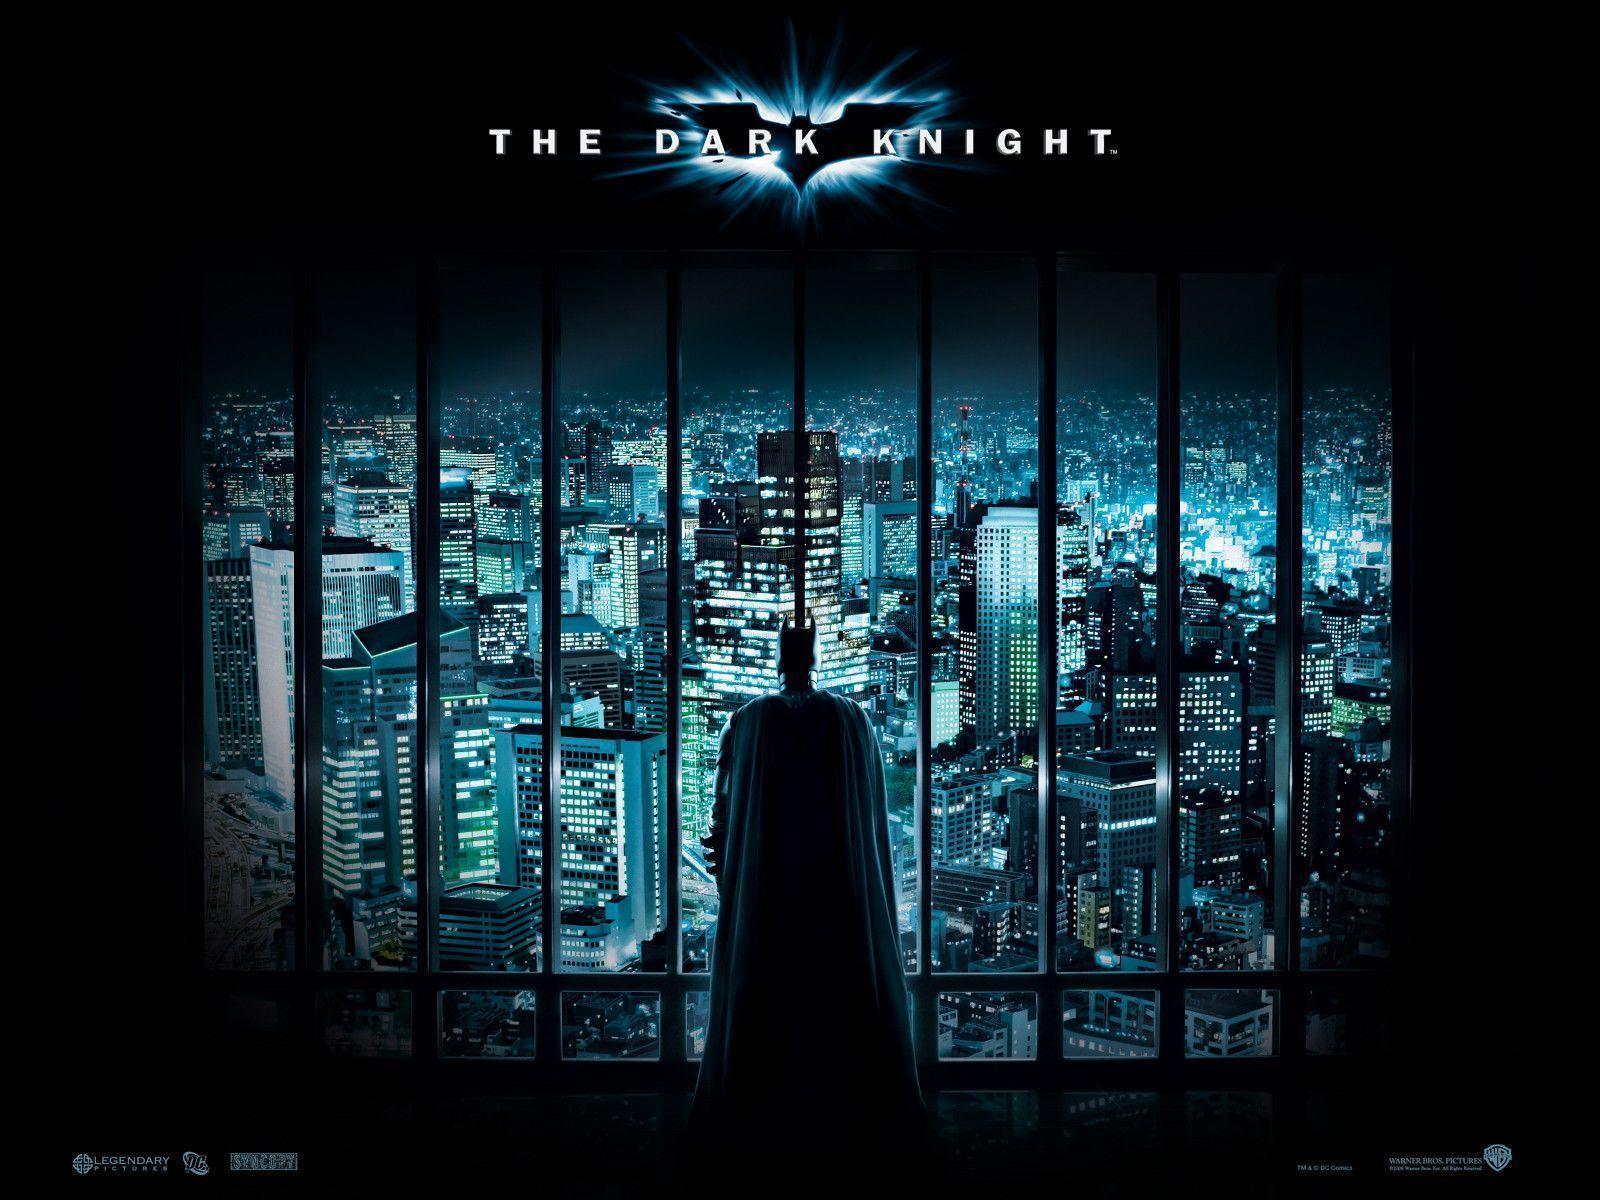 Wallpaper of the Batman&;s Movie “The Dark Knight”. SolSie